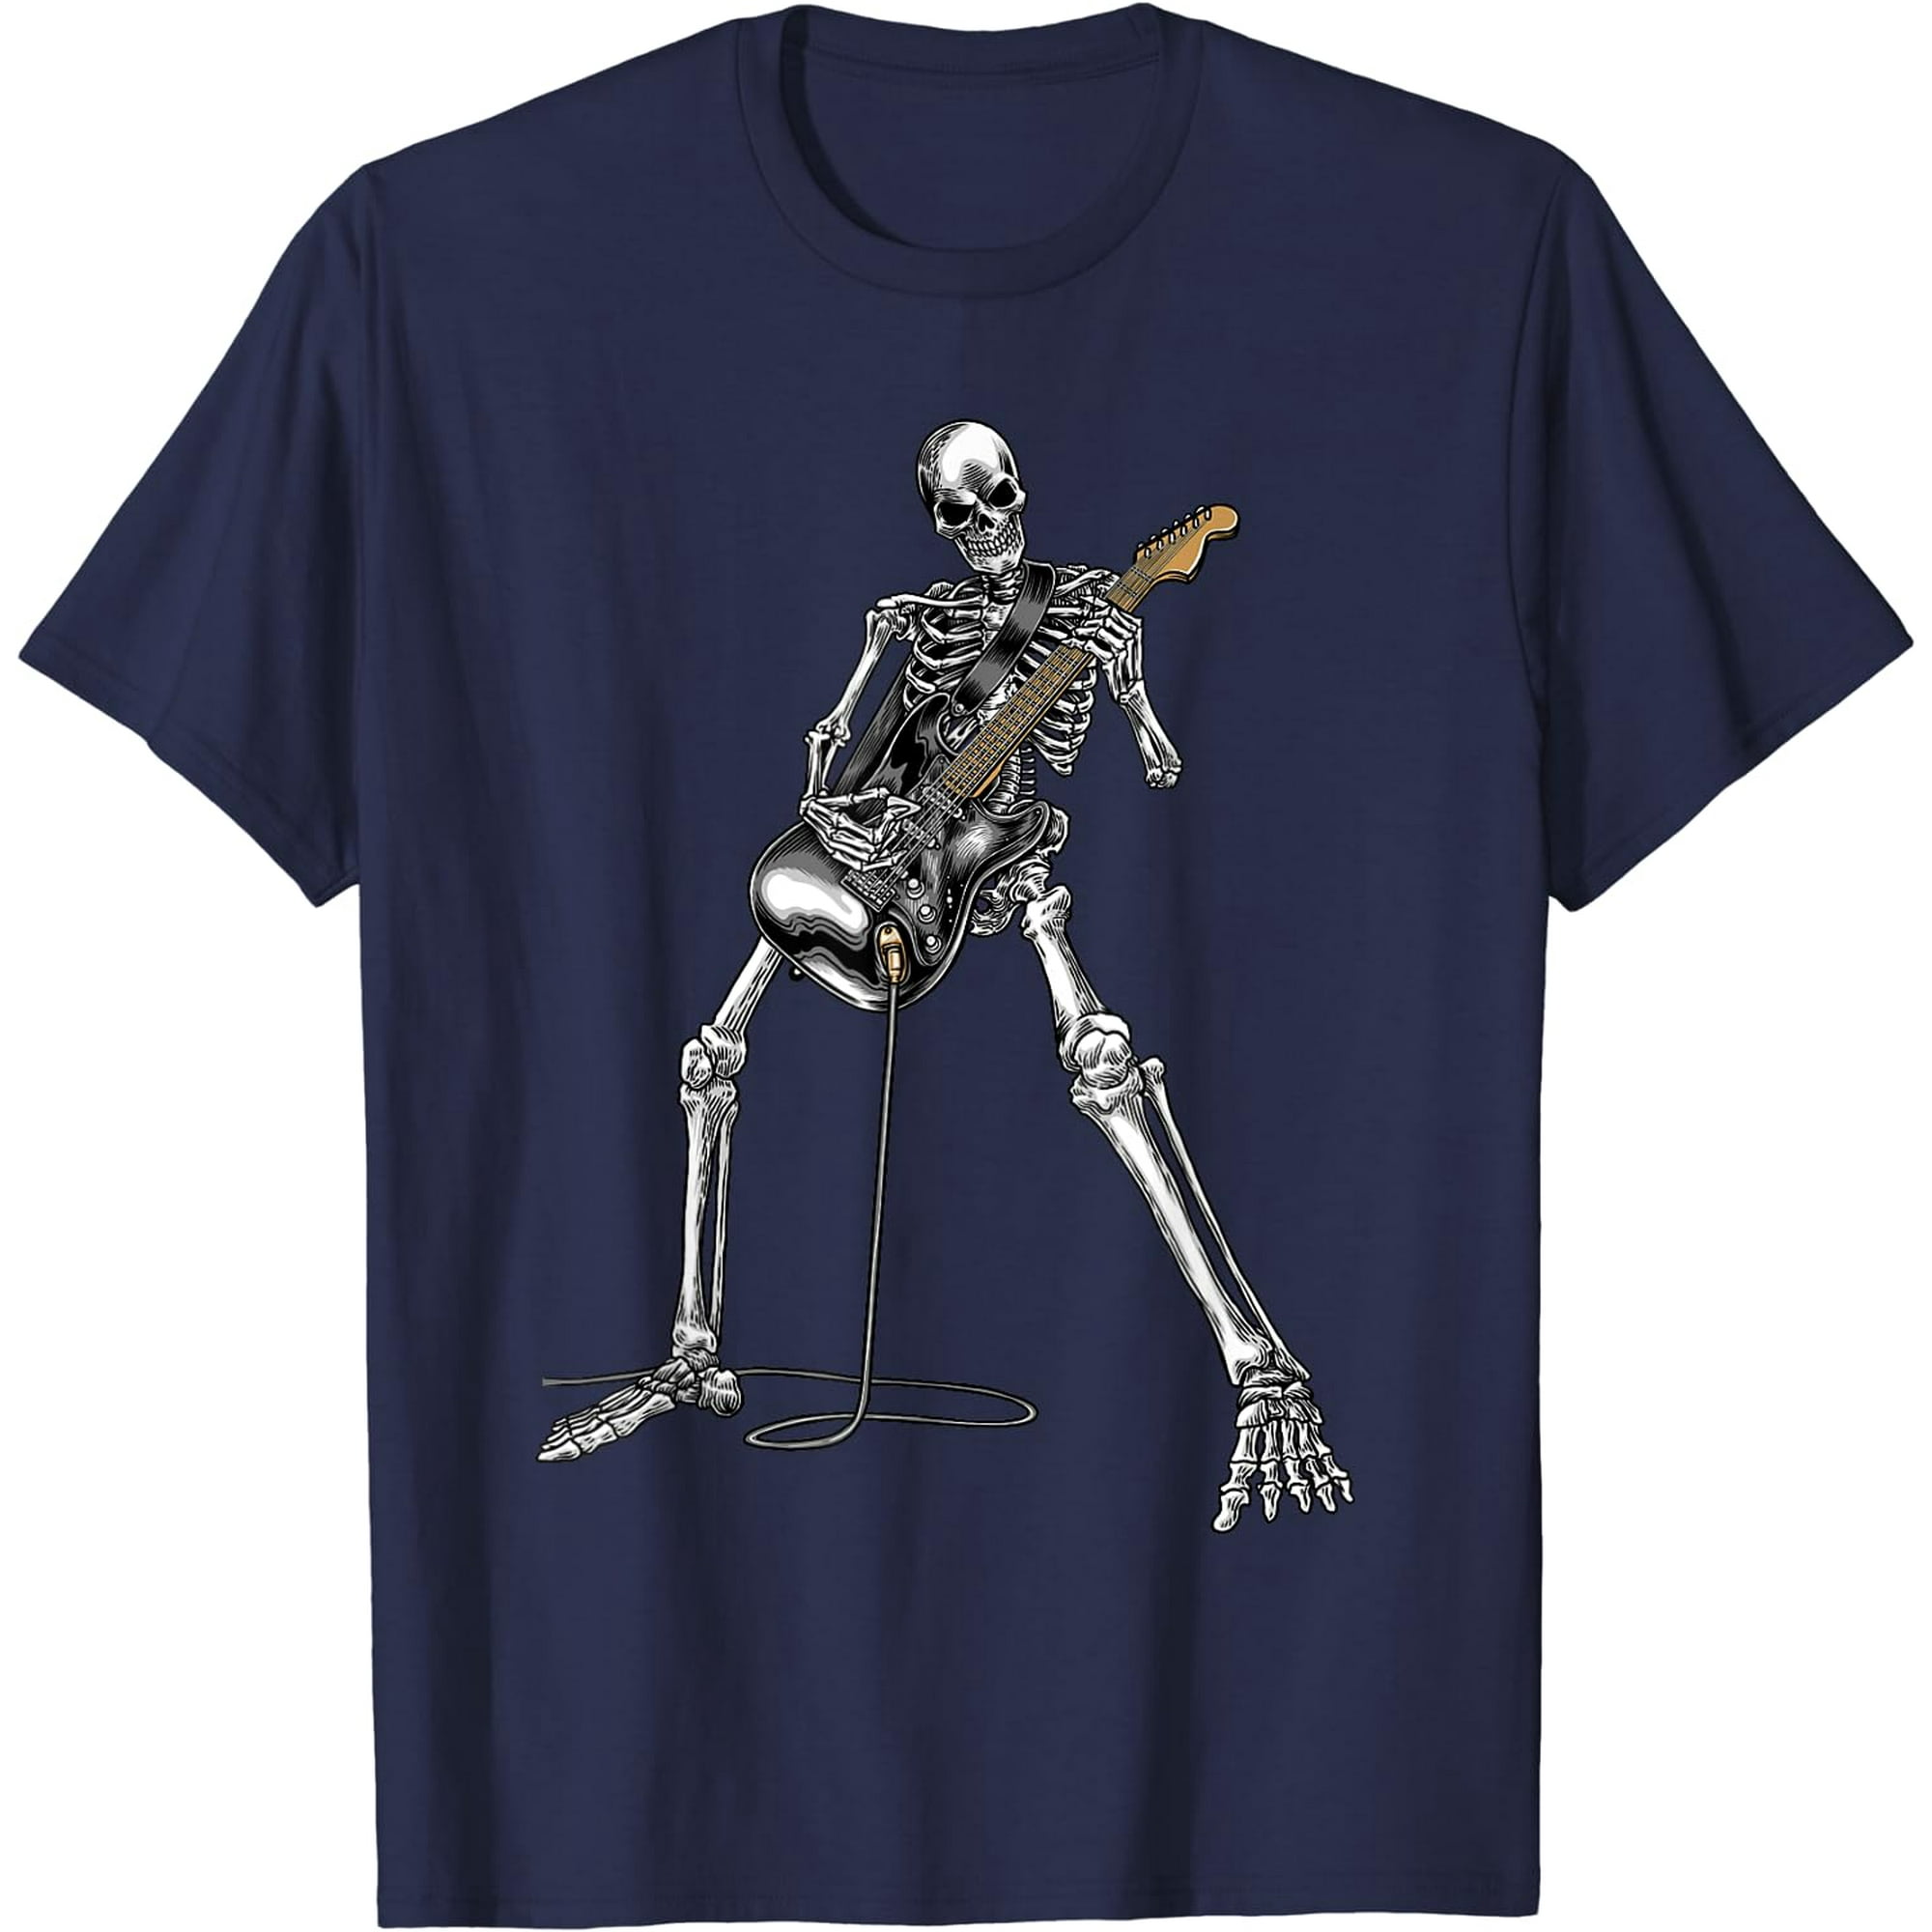 Band Shirts Rock And Guitar T Shirts For Men Band Tee T-Shirt - Walmart .com